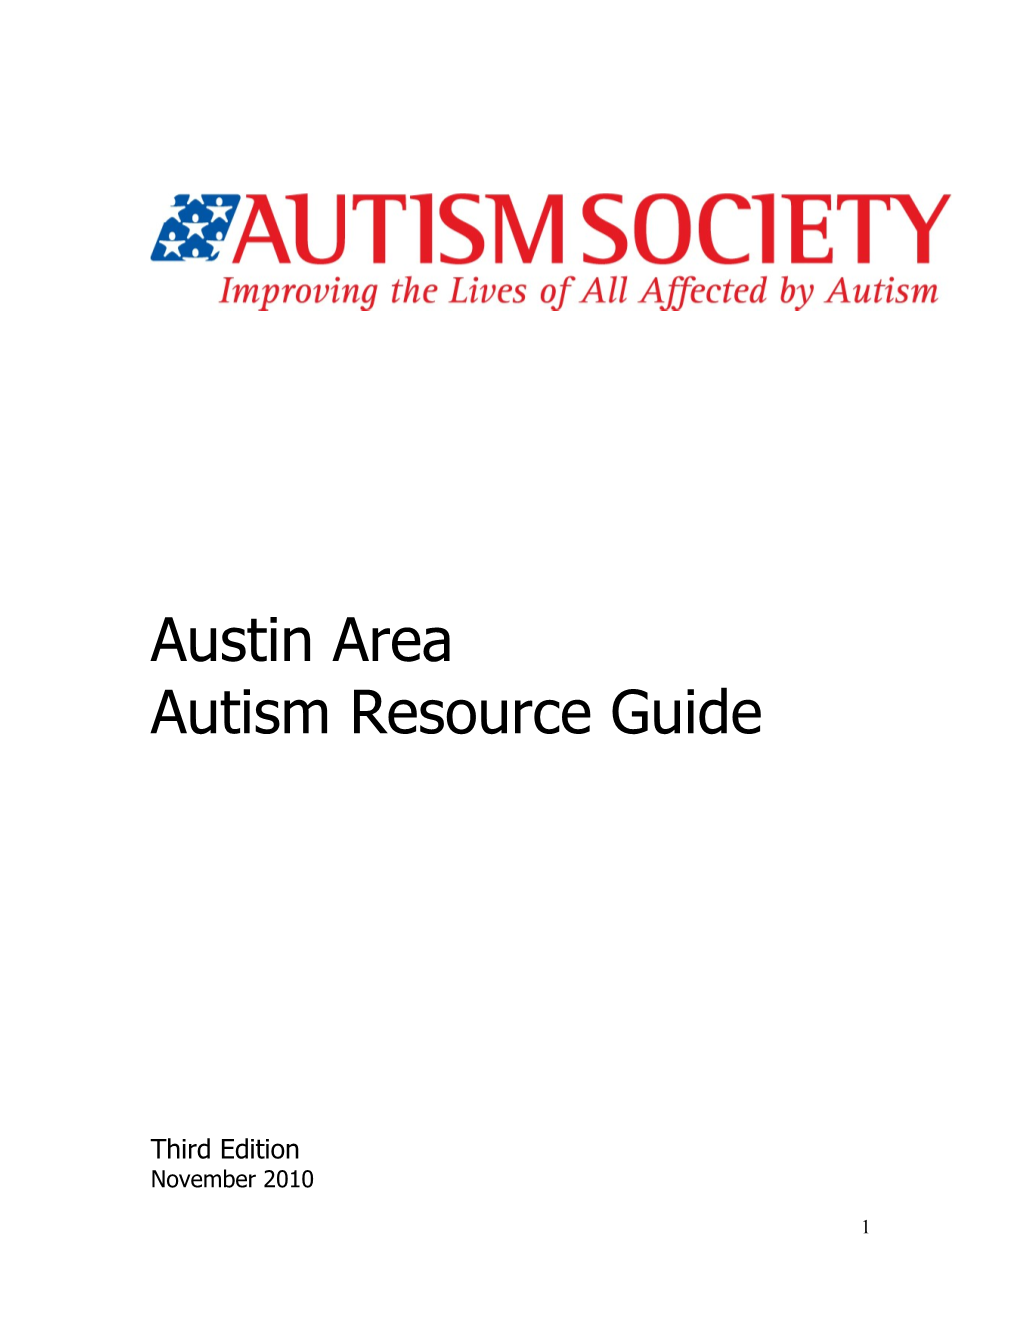 The Autism Society